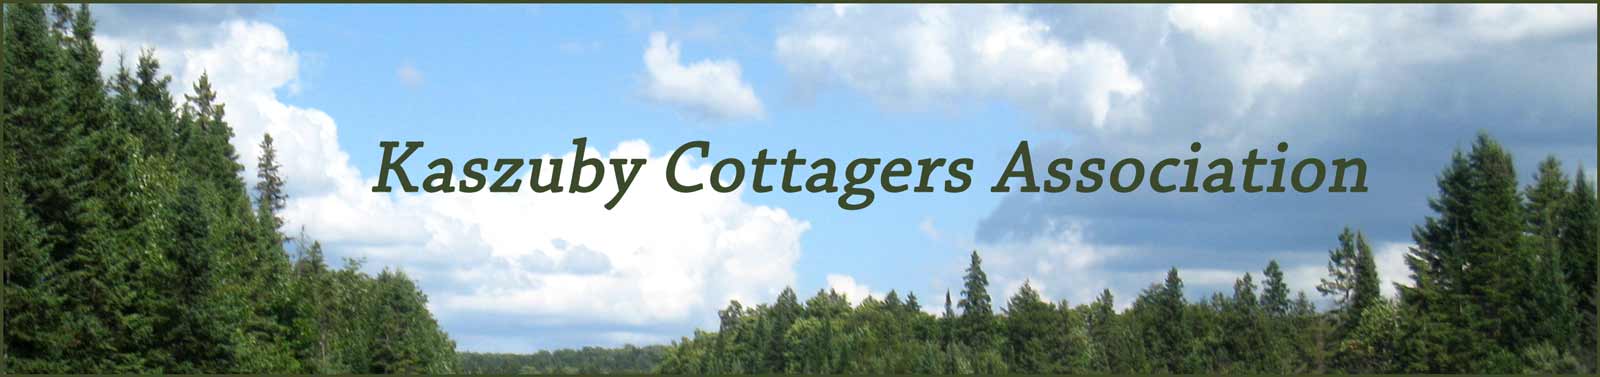 Kaszuby Cottagers Association